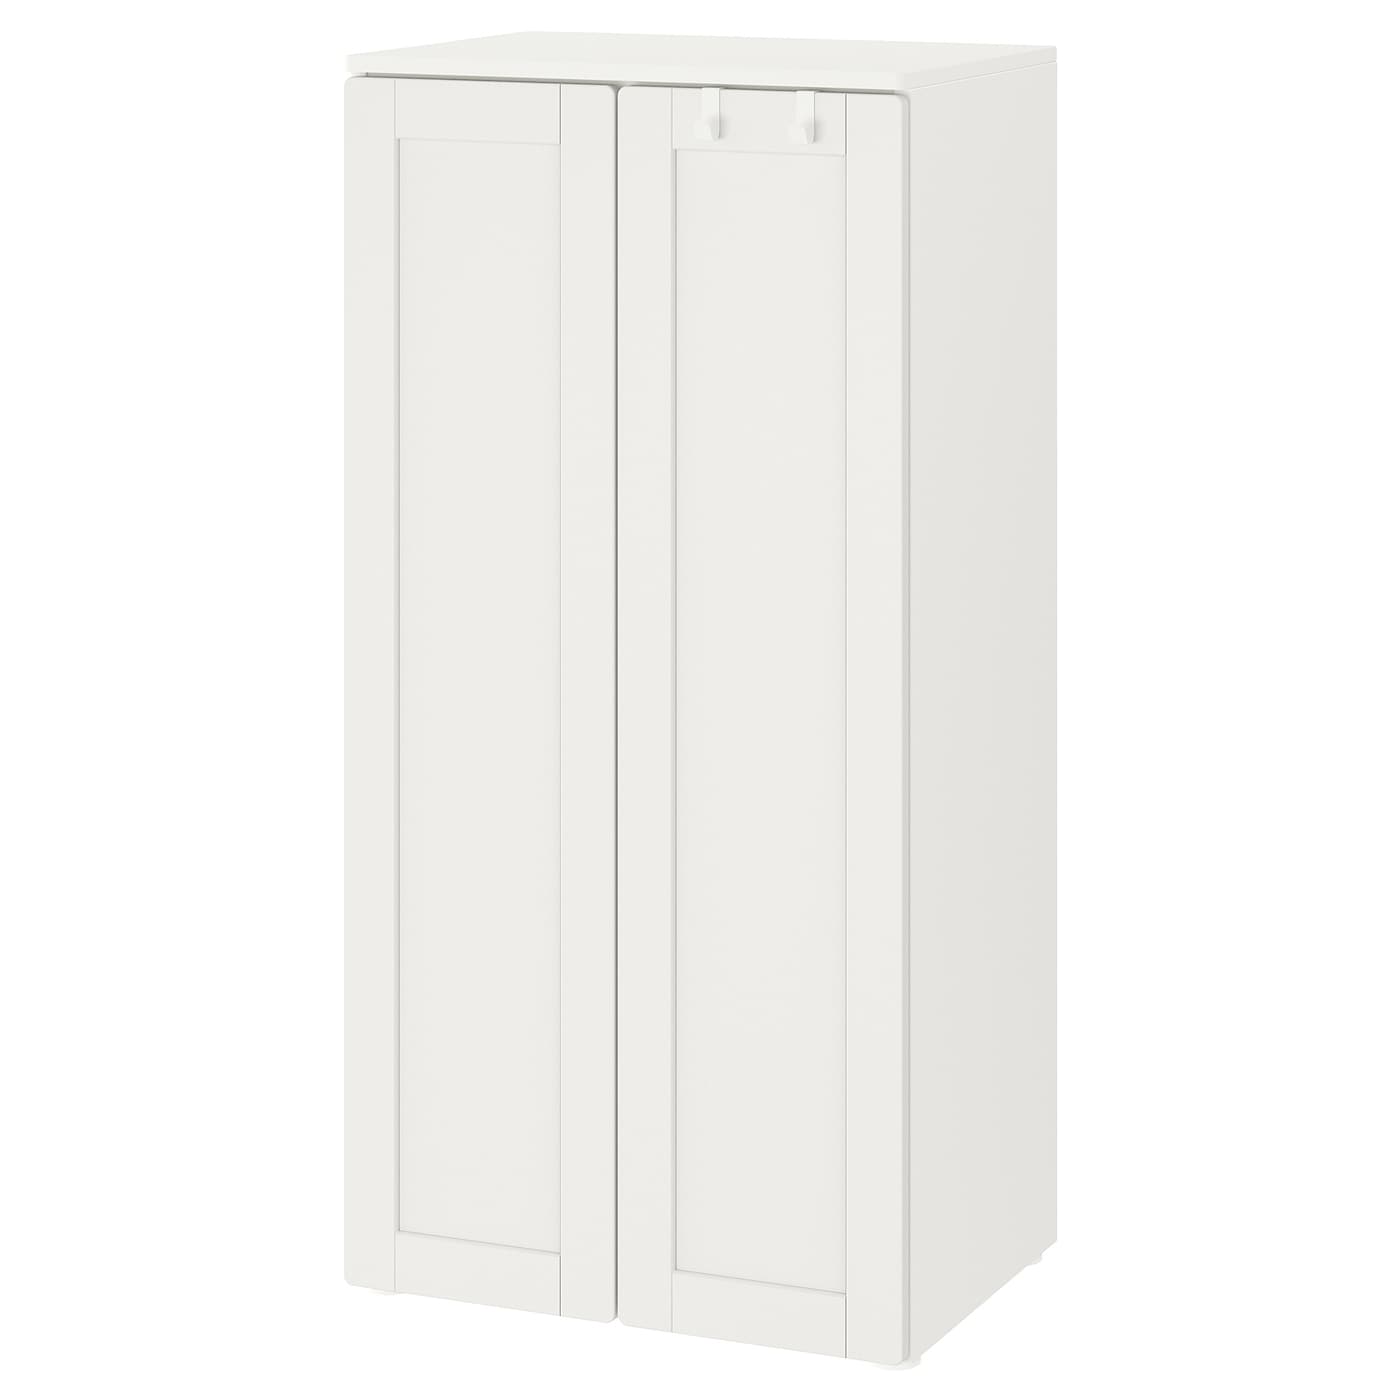 Шкаф - SMÅSTAD / SMАSTAD  IKEA /СМОСТАД  ИКЕА, 60x42x123 см, белый